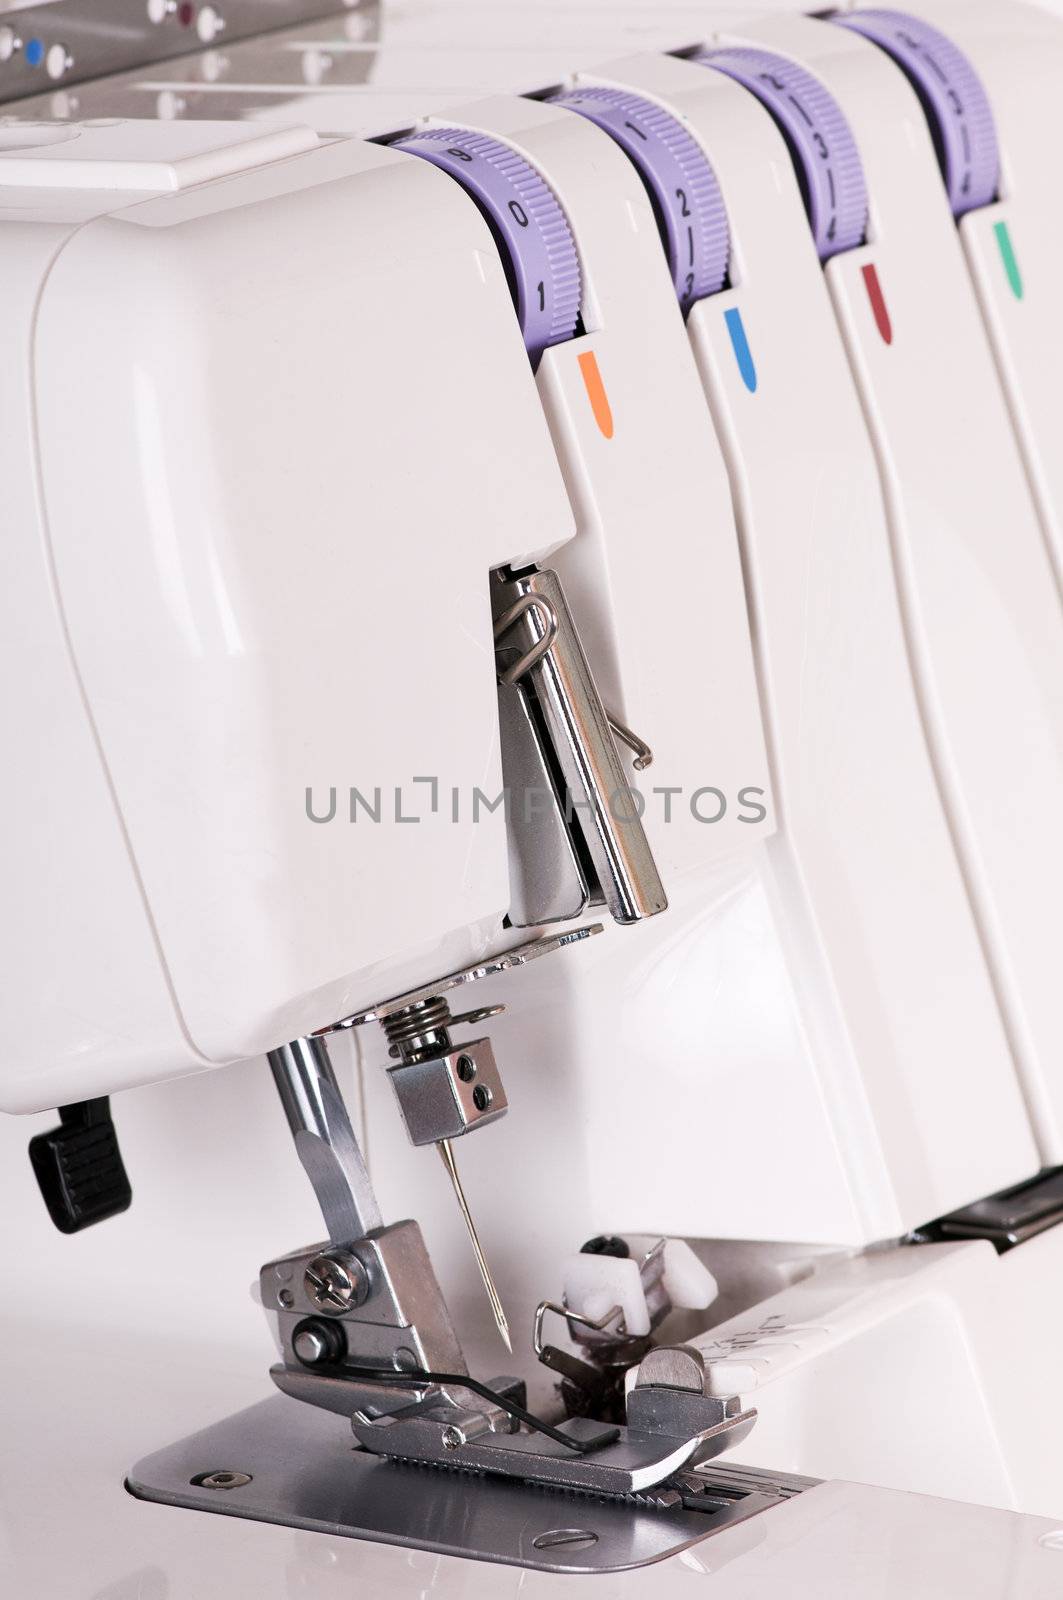 sewing-machine by uriy2007